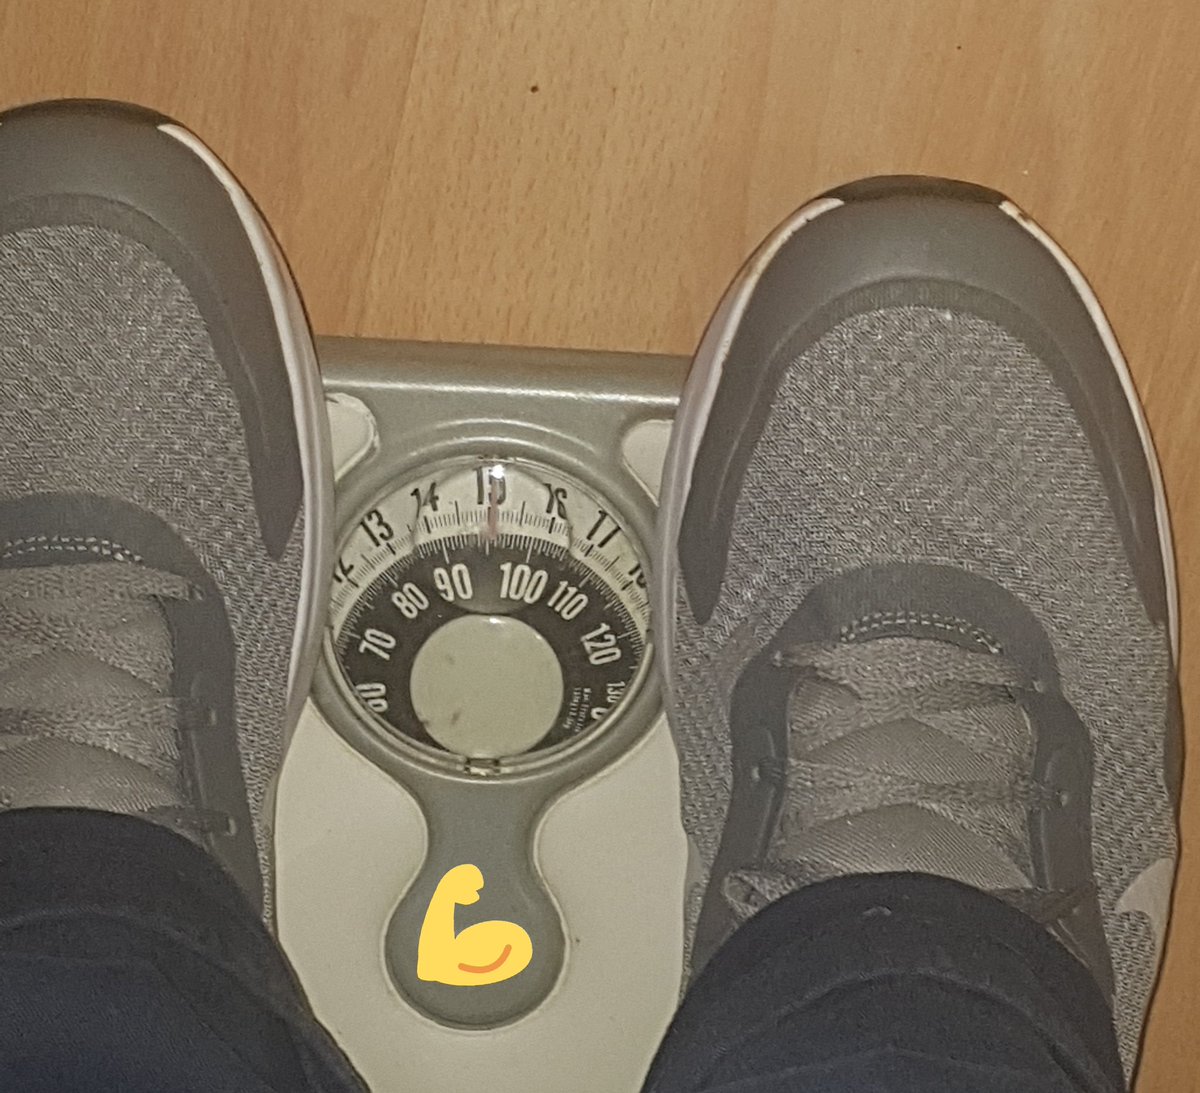 198 cm x 97 kg! Optimum height weight ratio https://t.co/BcGQgKFM5z